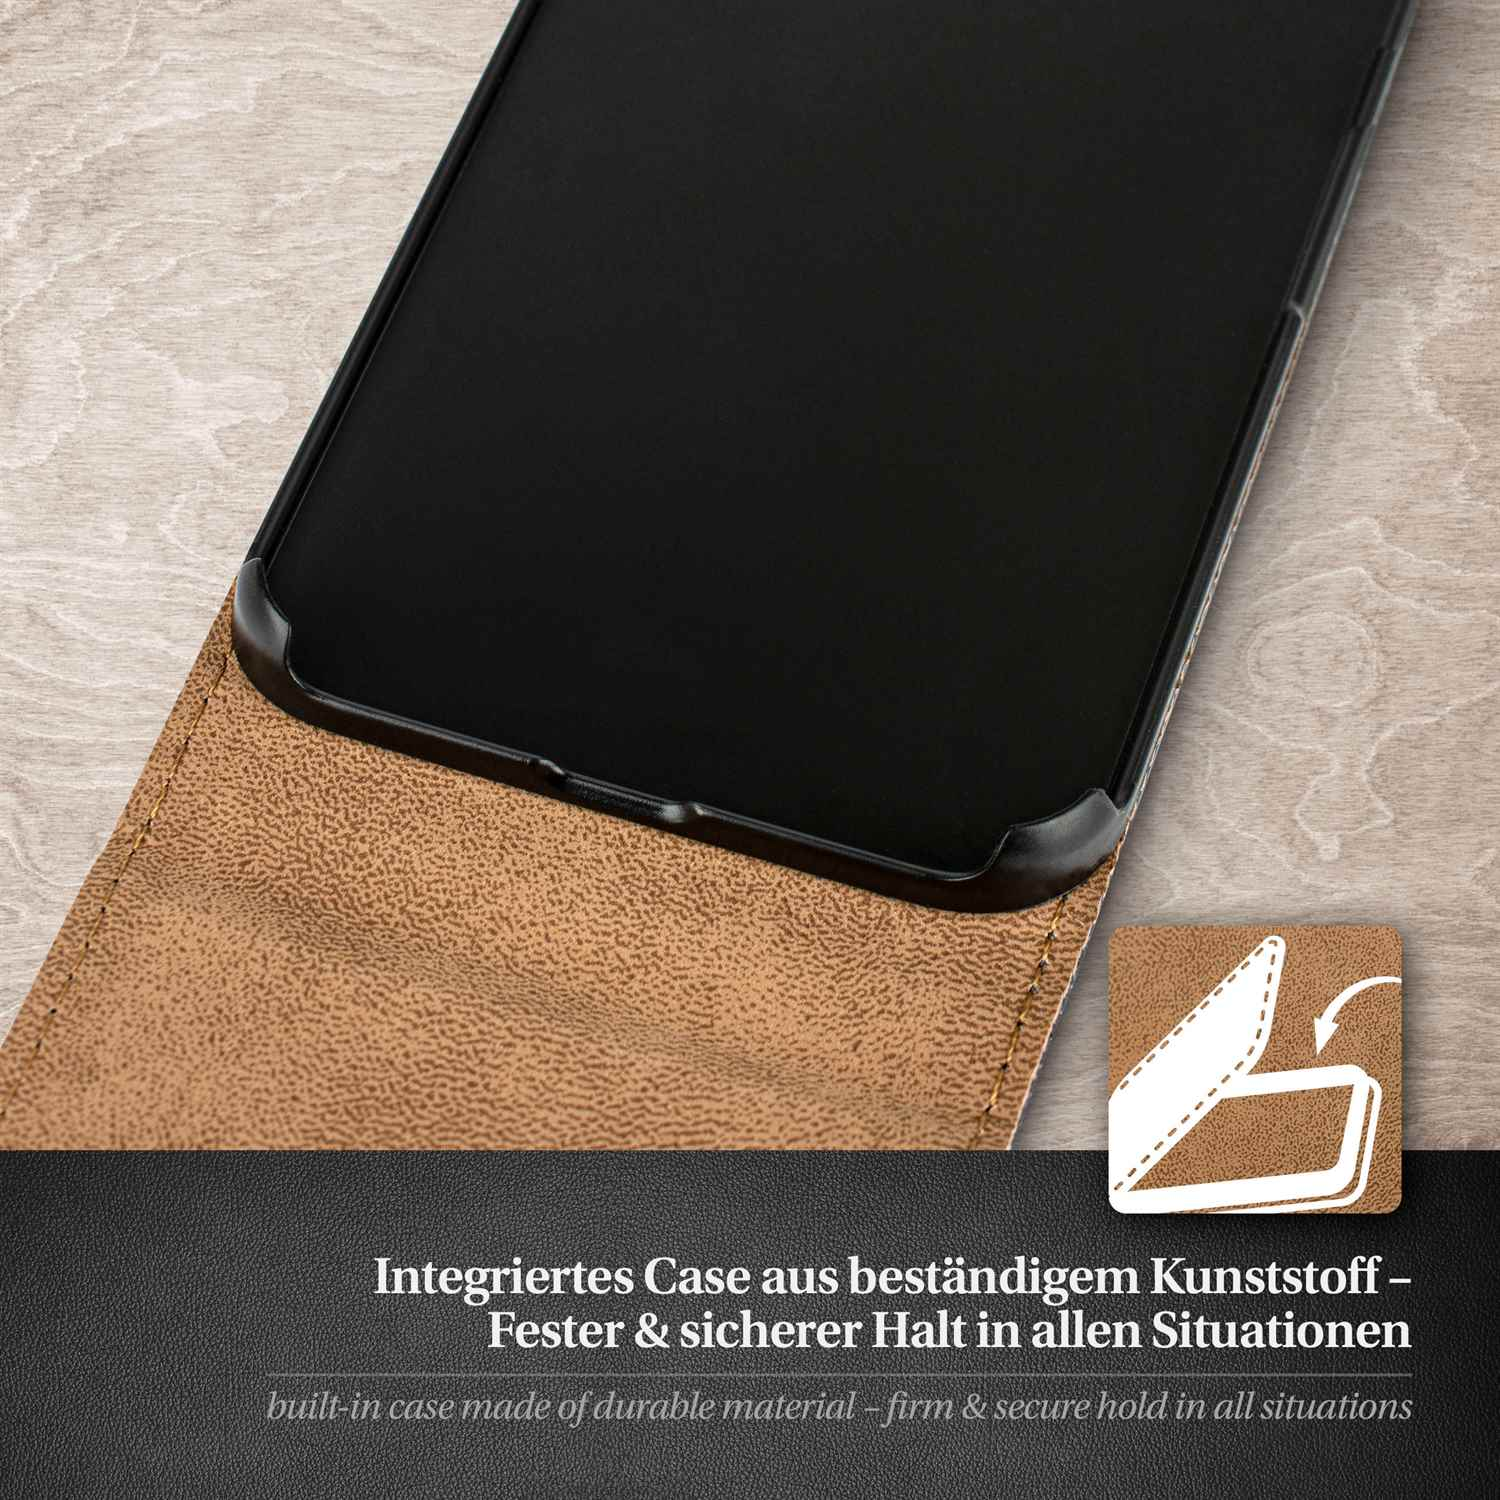 Cover, Flip Huawei, Oxide-Brown Y300, Case, MOEX Flip Ascend